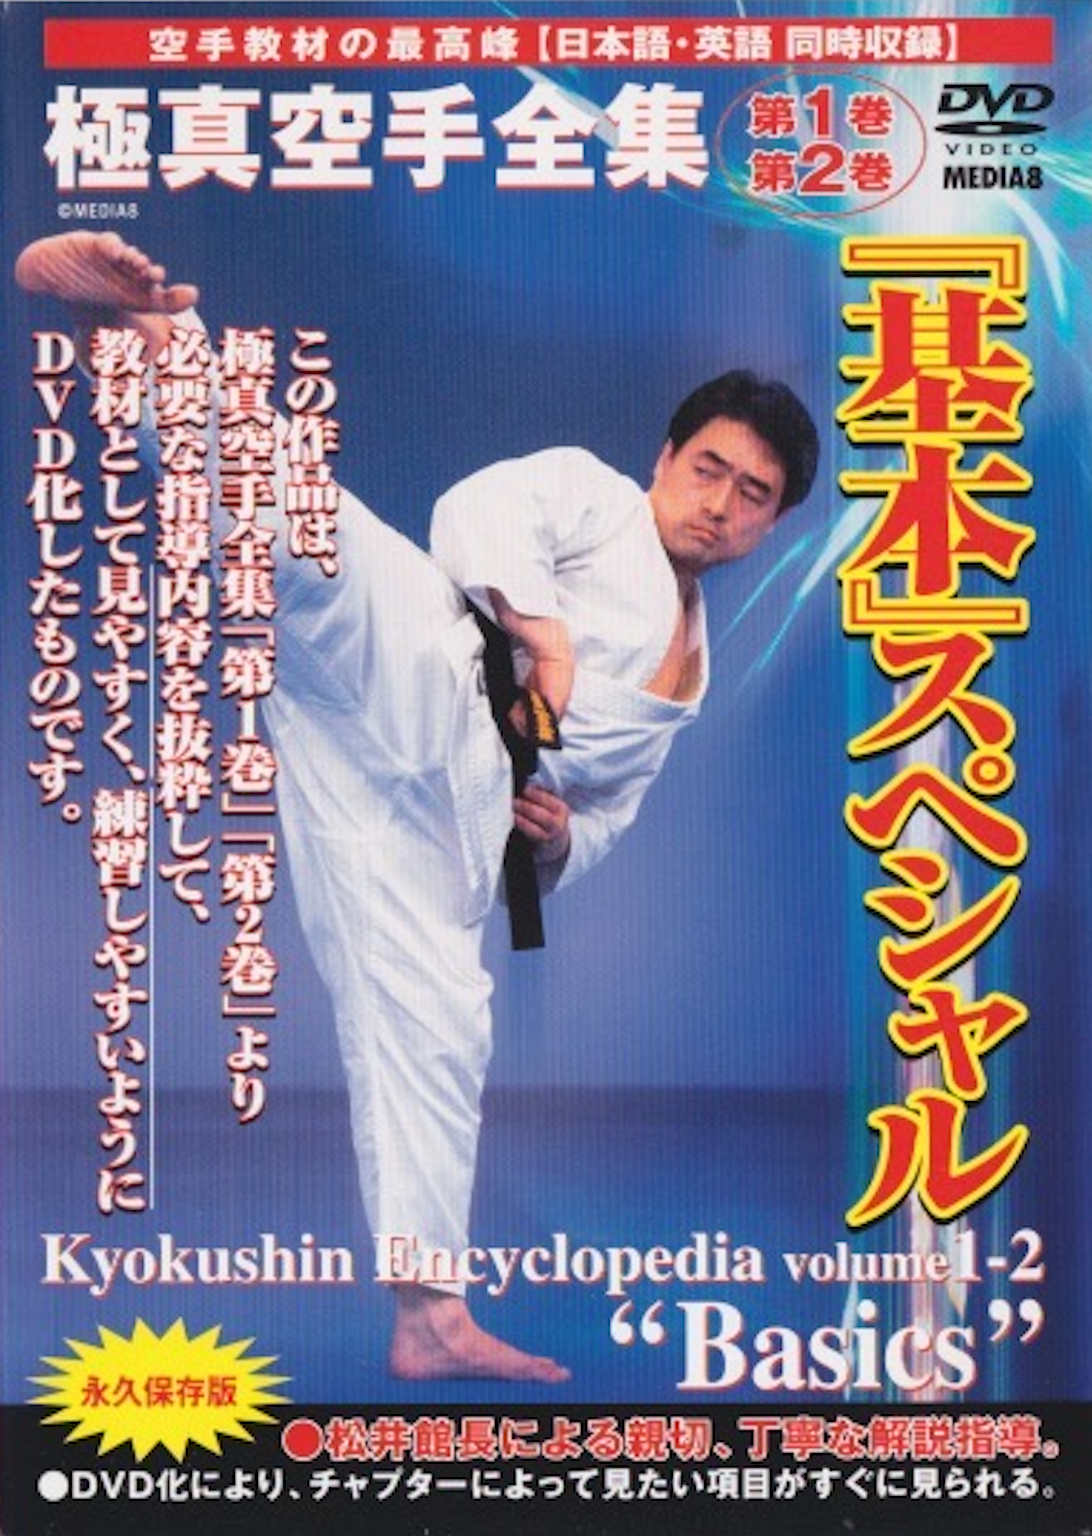 Kyokushin Karate Encyclopedia Vol 1 & 2: Basics DVD by Shokei Matsui